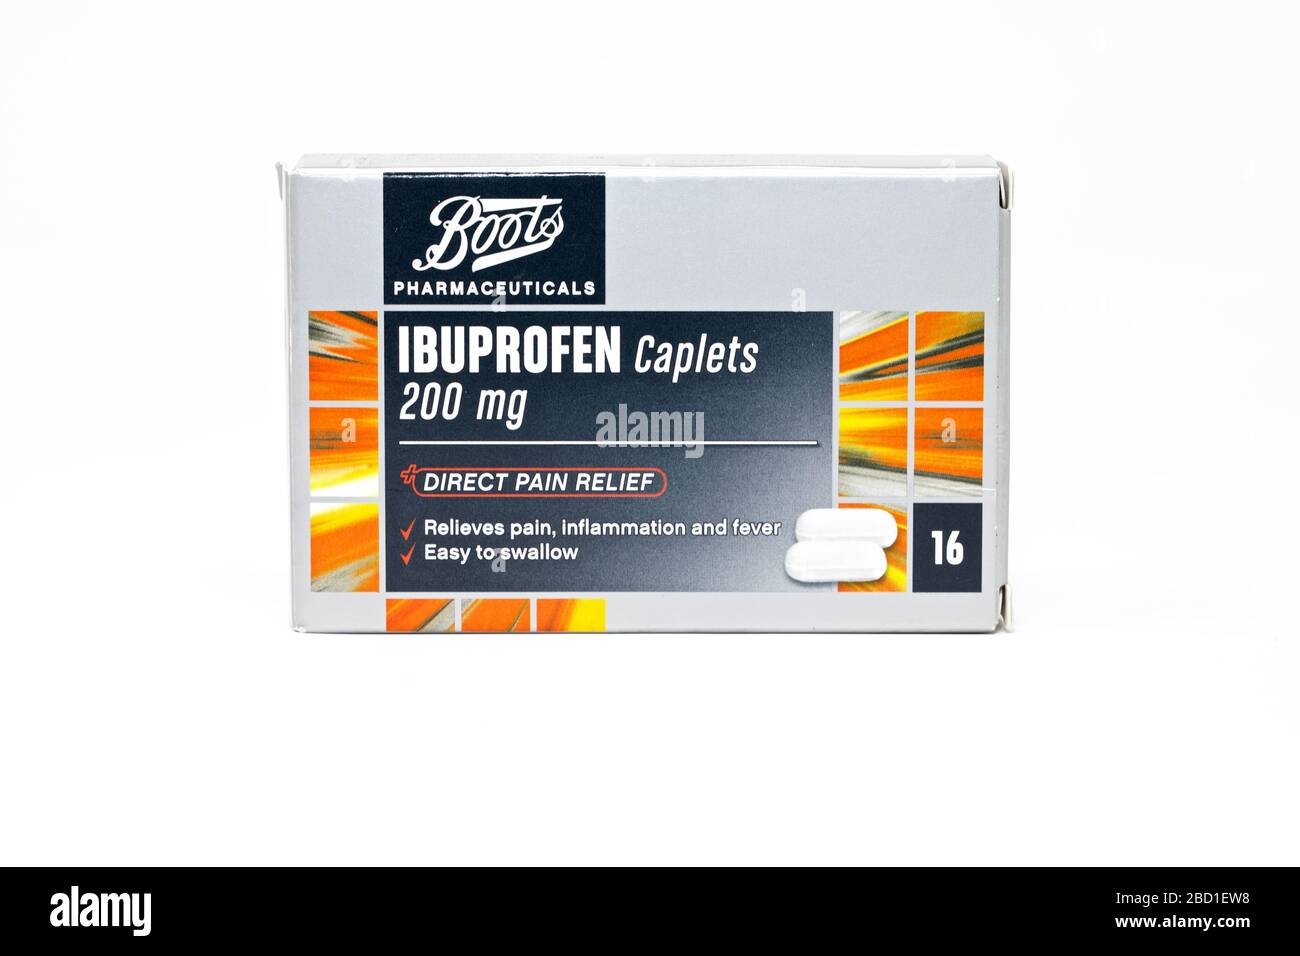 Boots Ibuprofen 200mg caplets Stock Photo - Alamy